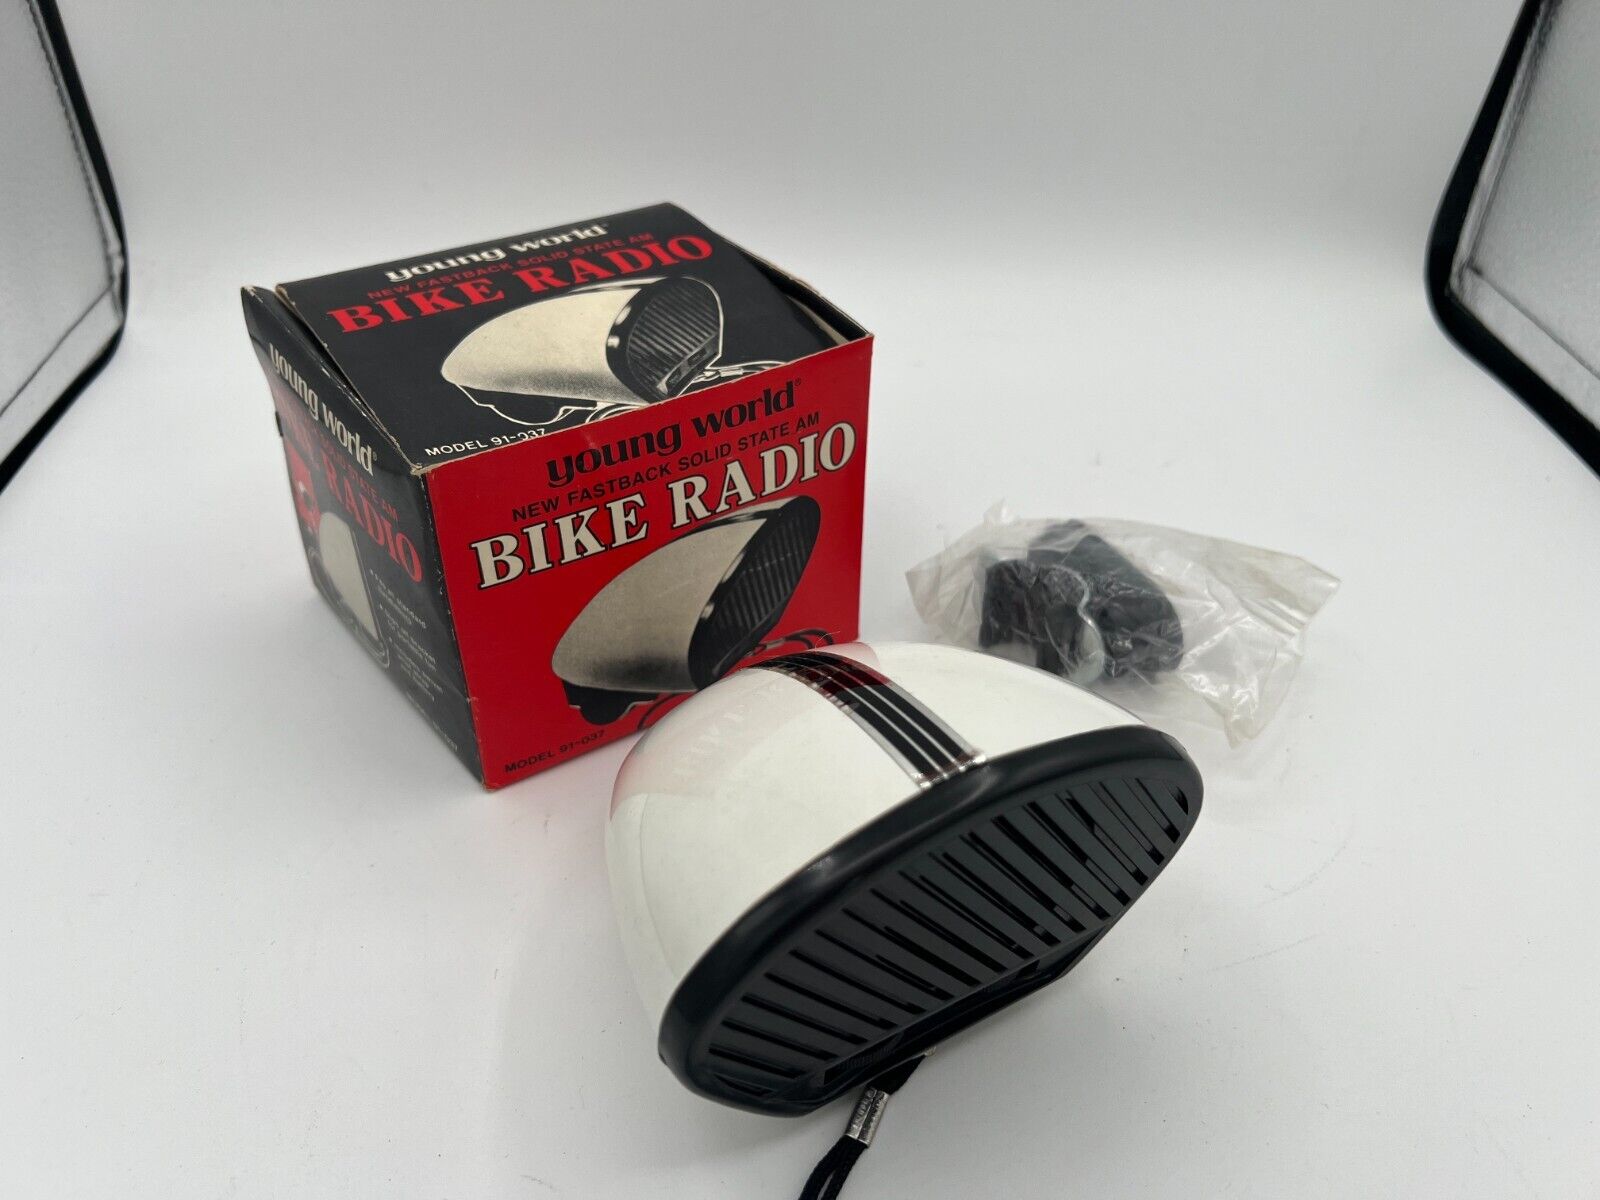 Vintage 1974 Young World Midland Bike Radio in Box - Has Major Corrosion